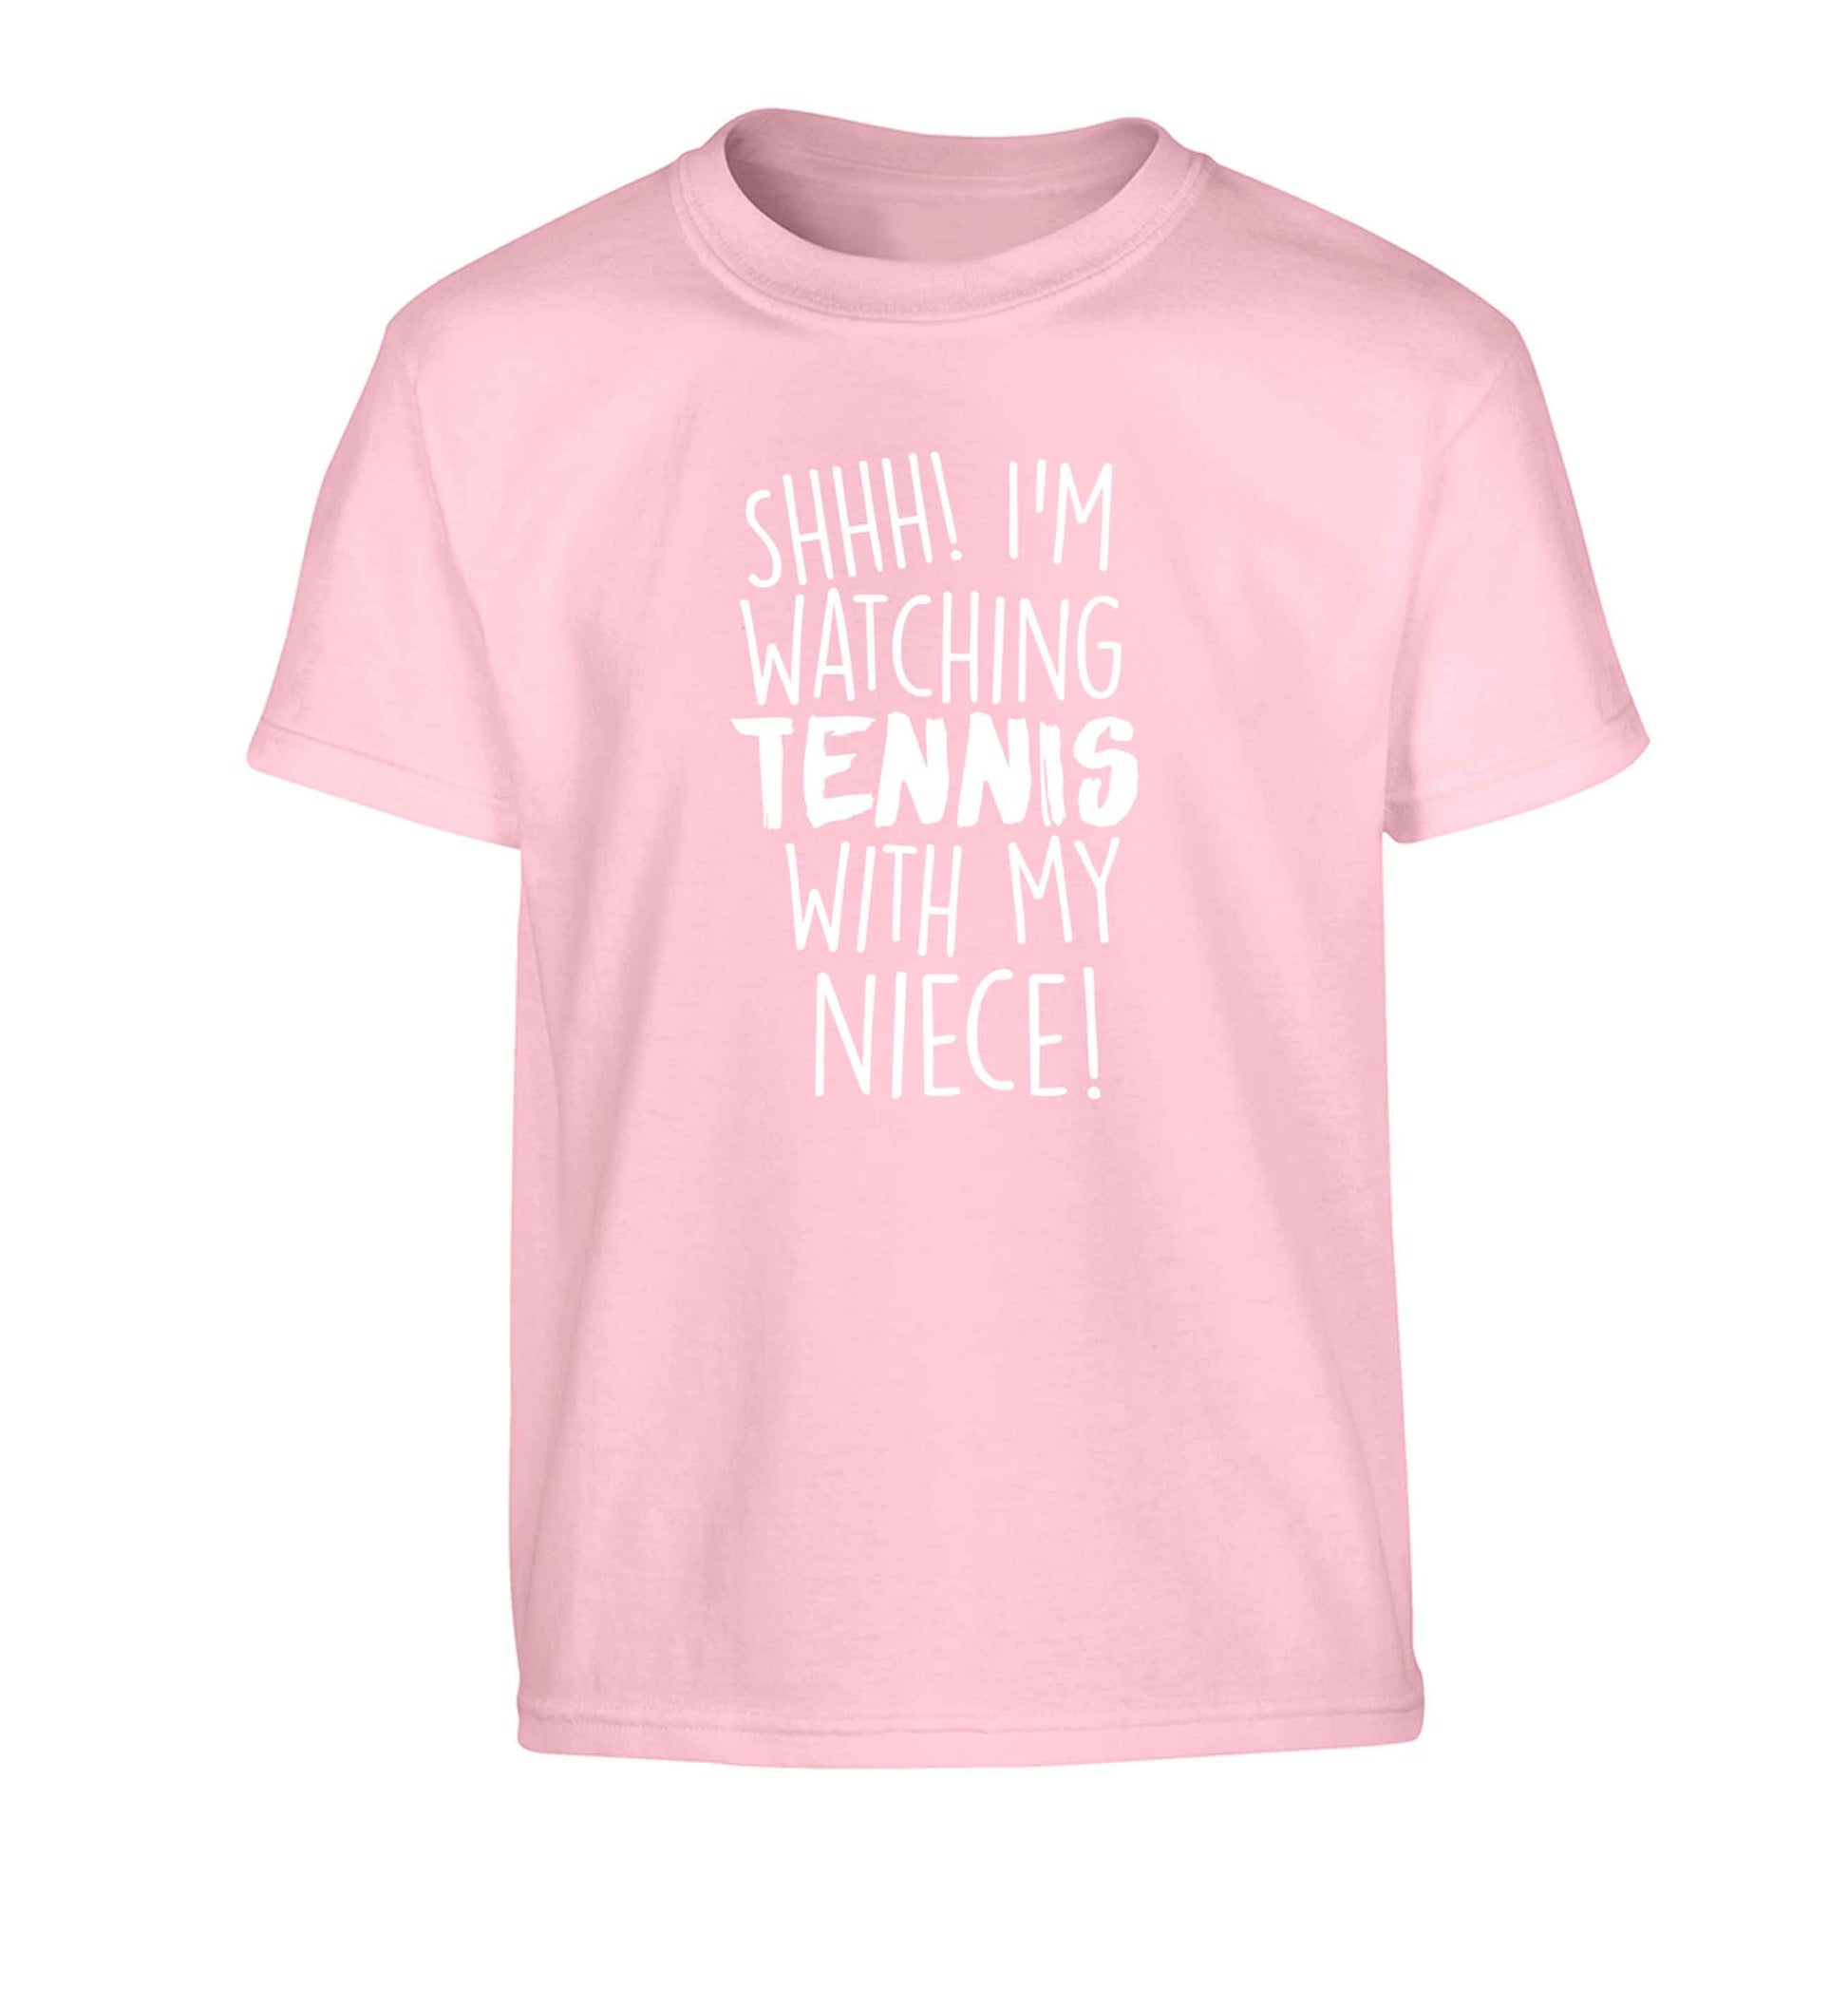 Shh! I'm watching tennis with my niece! Children's light pink Tshirt 12-13 Years